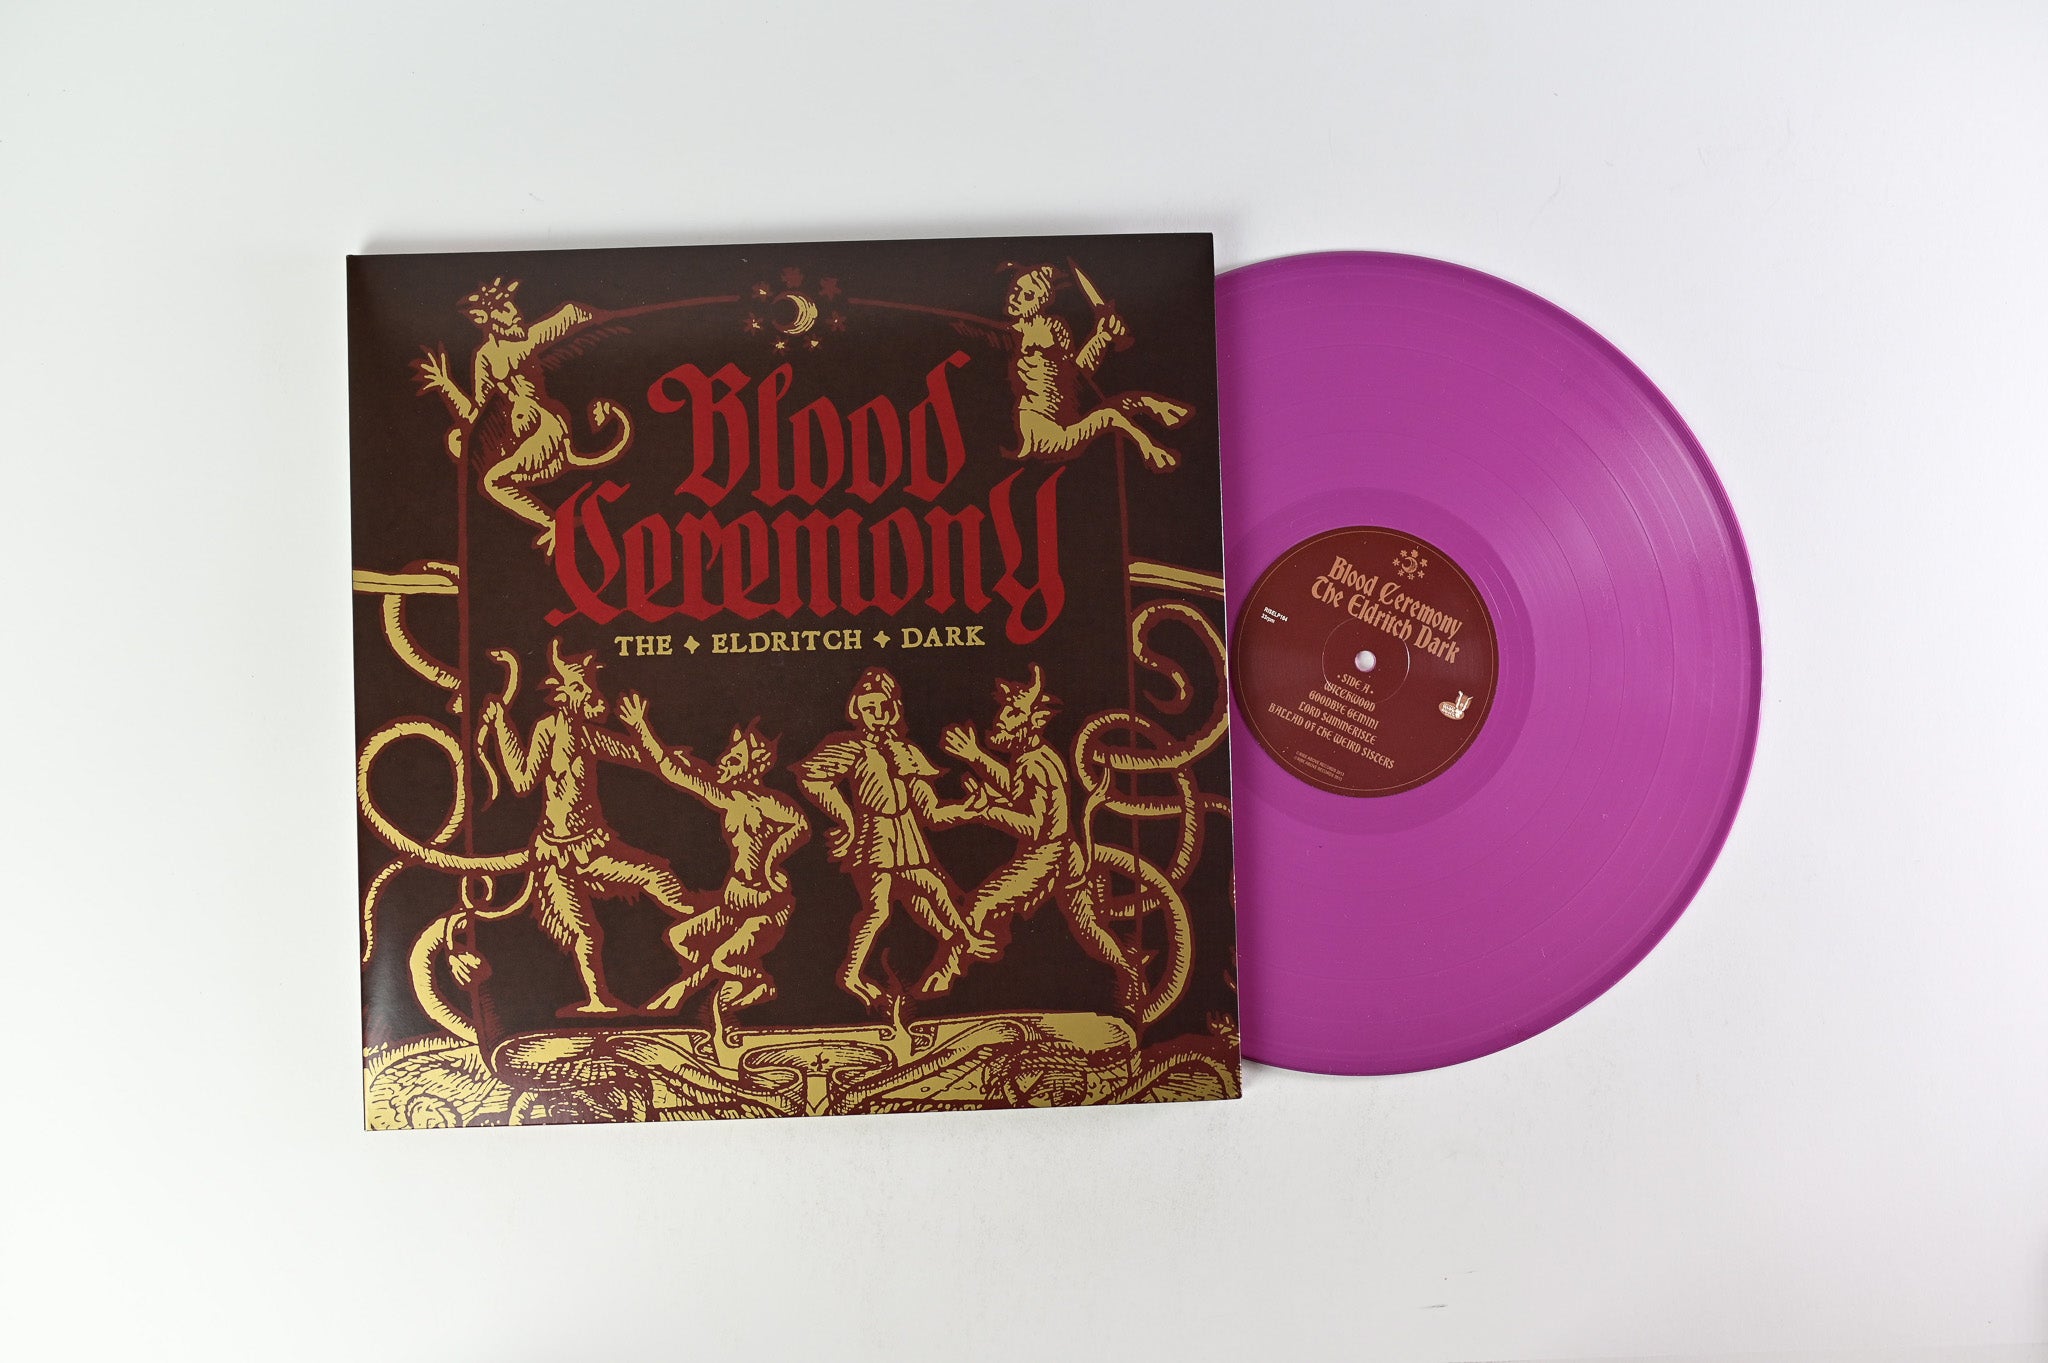 Blood Ceremony - The Eldritch Dark on Rise Above Ltd Edition Die Hard Purple Vinyl Box Set